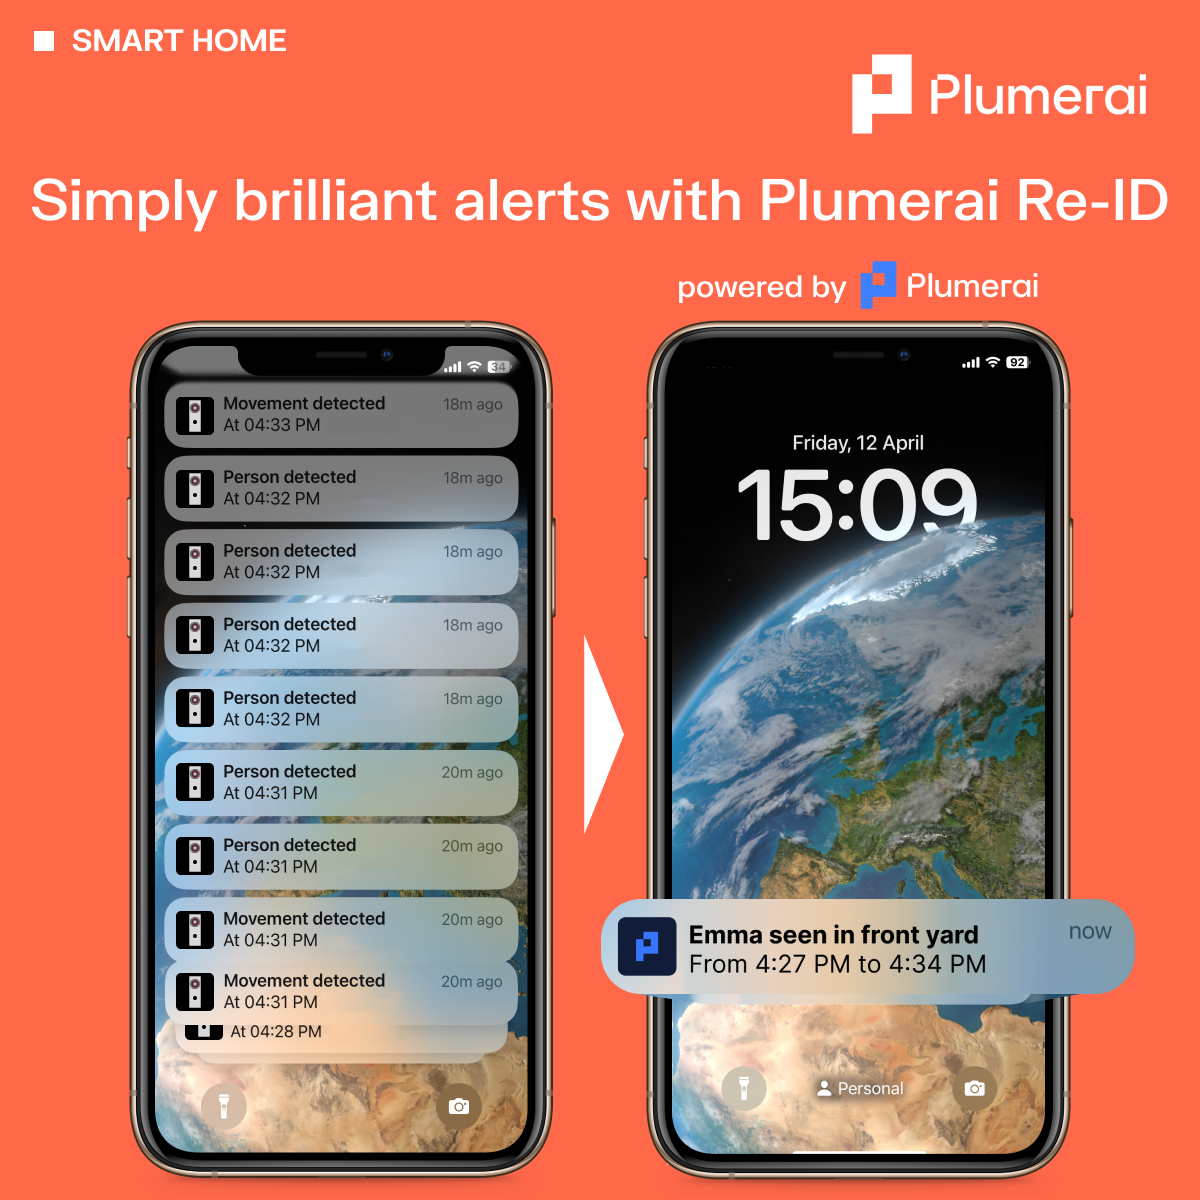 Simply brilliant alerts with Plumerai Re-ID